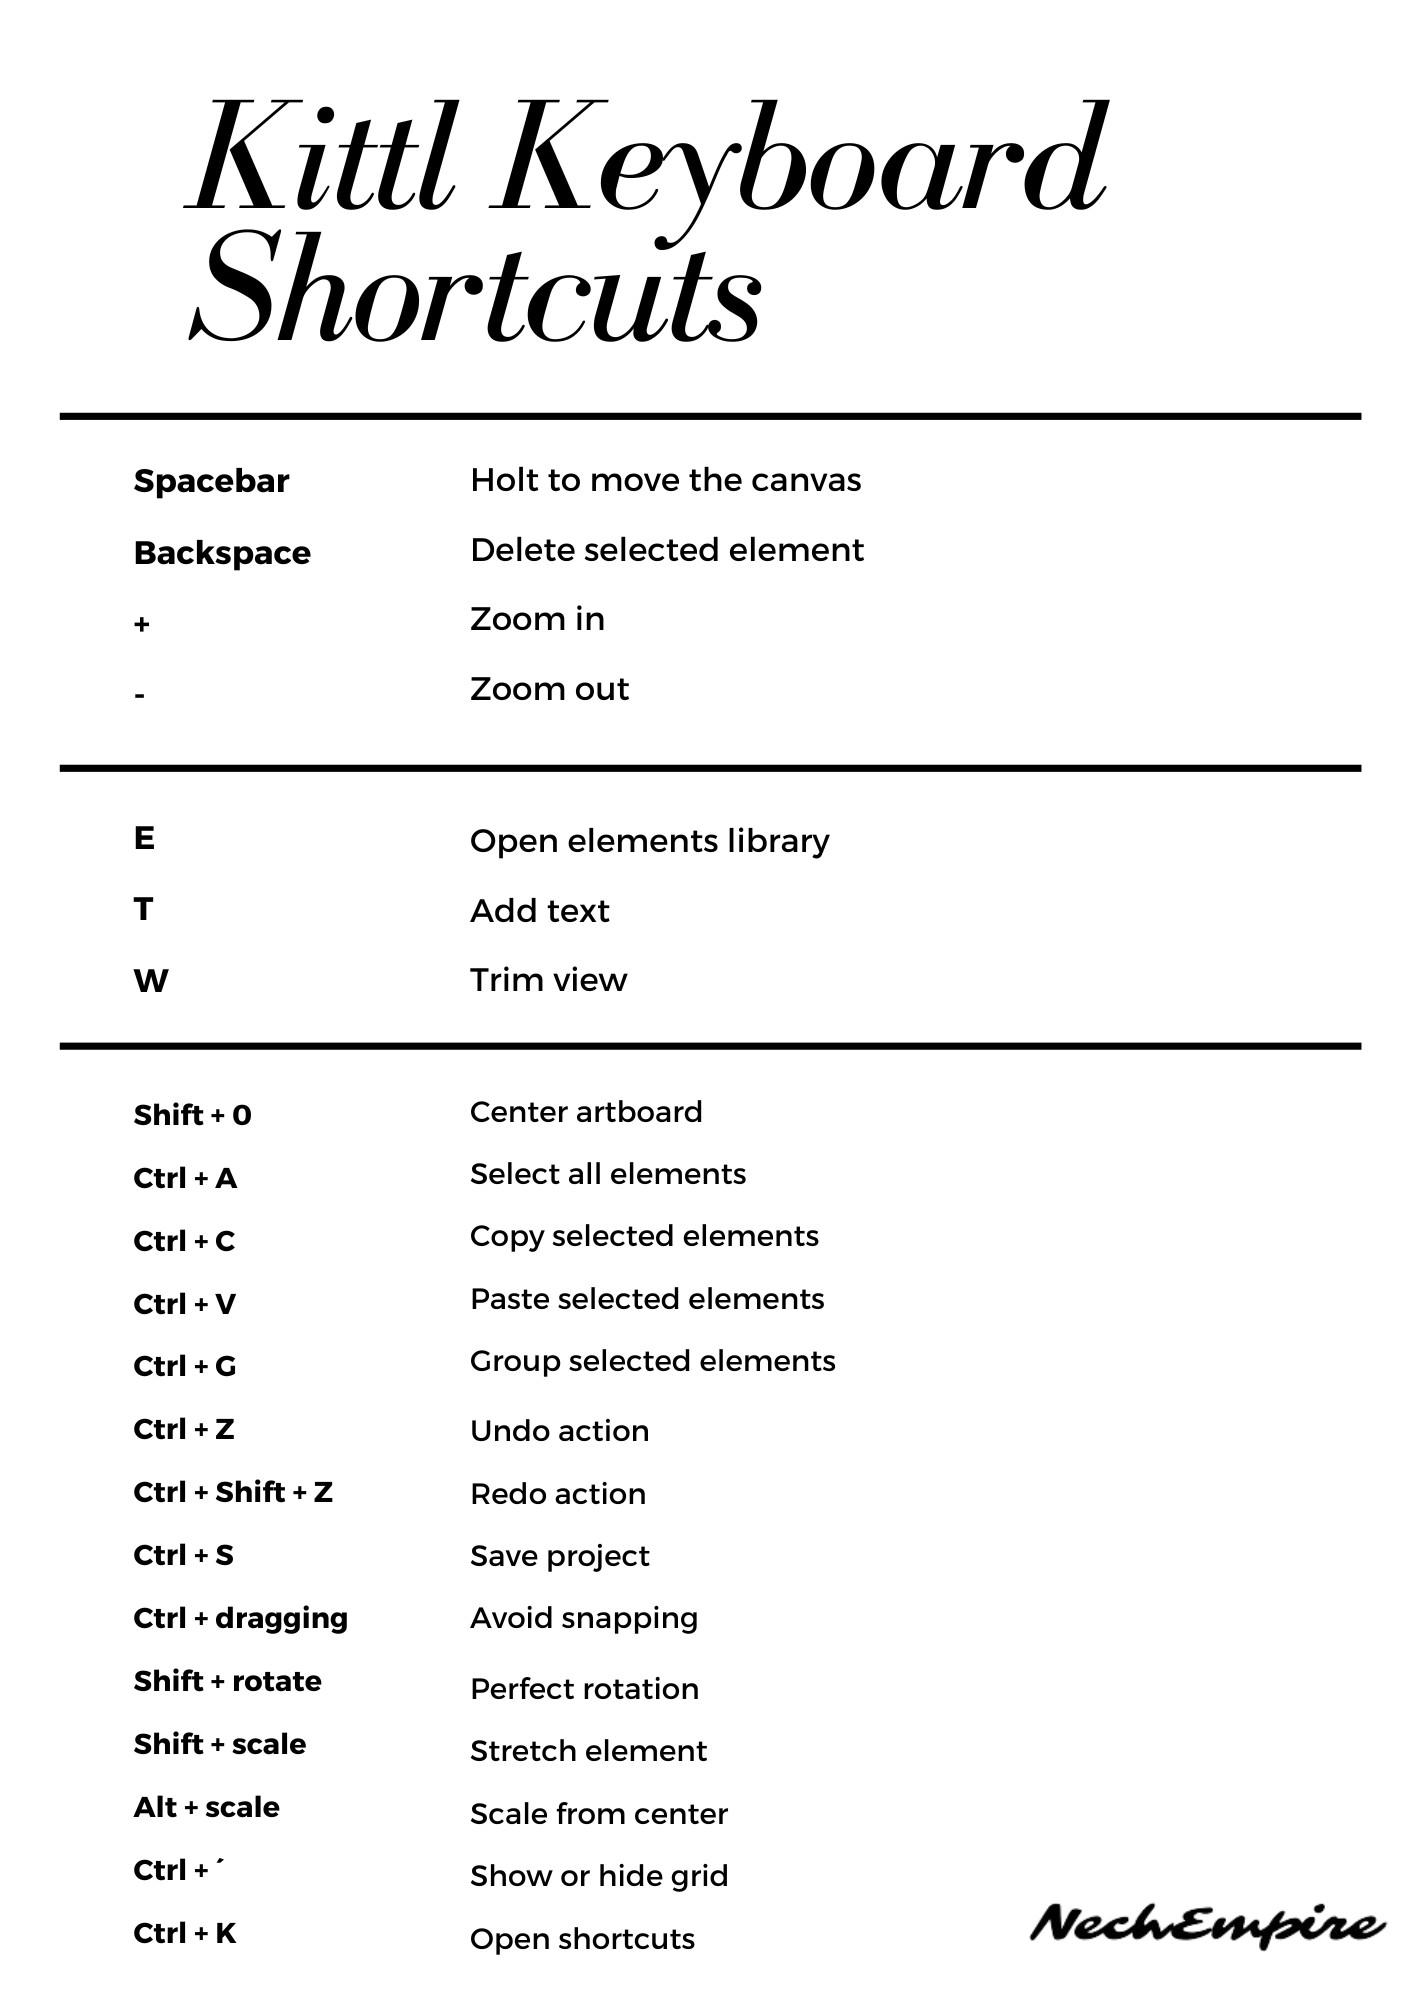 Kittl shortcuts infographics